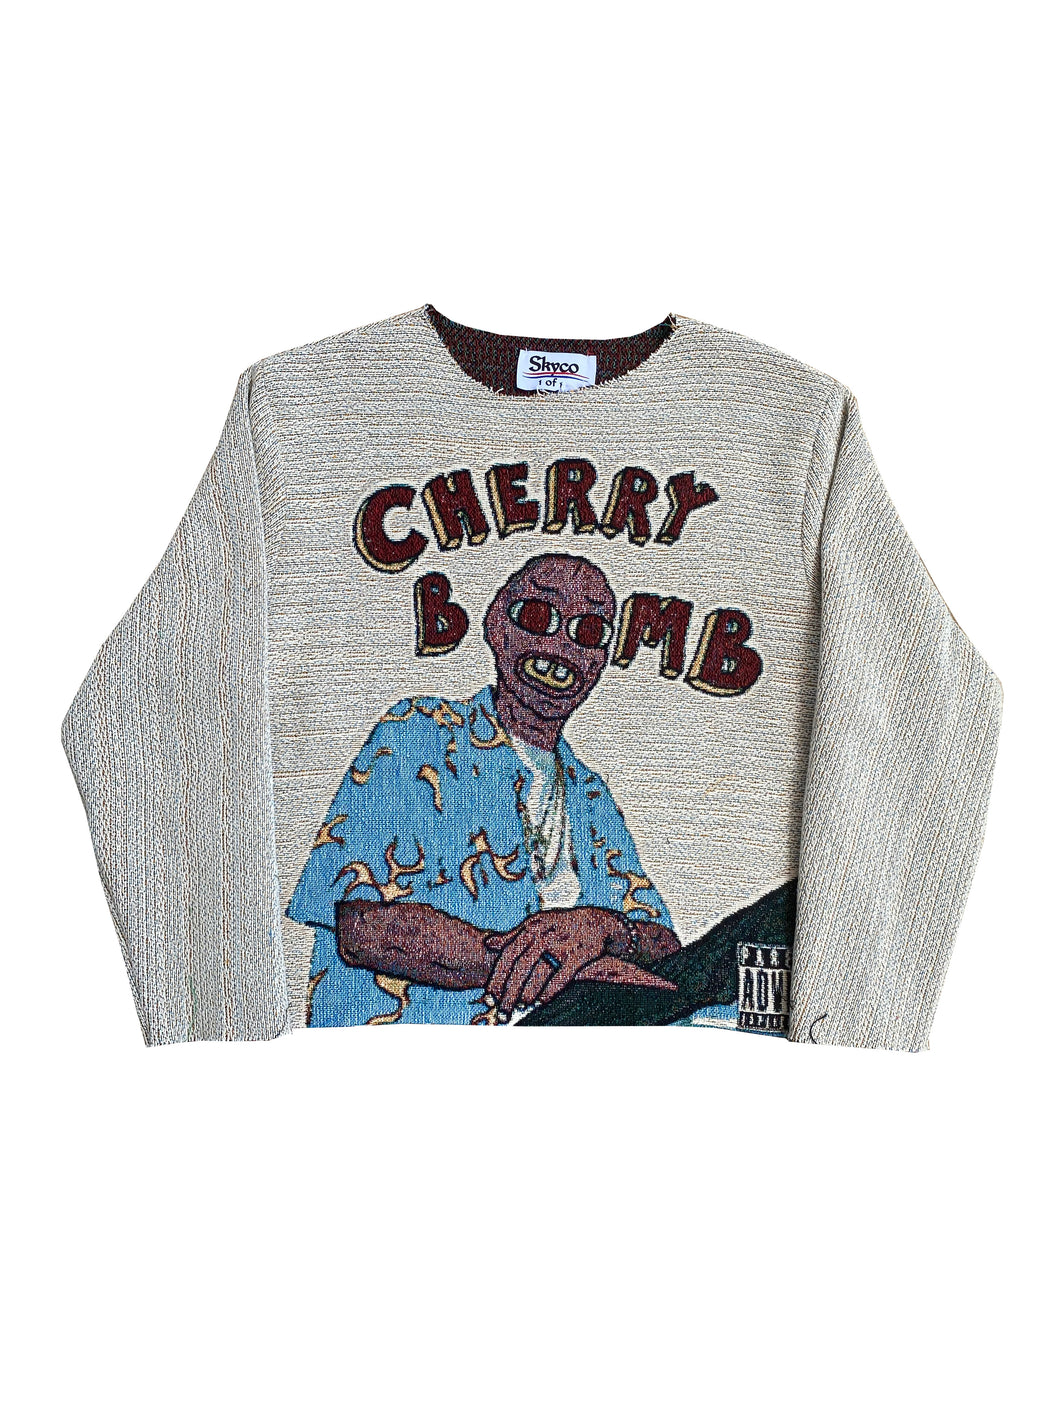 Cherry Bomb Sweatshirt